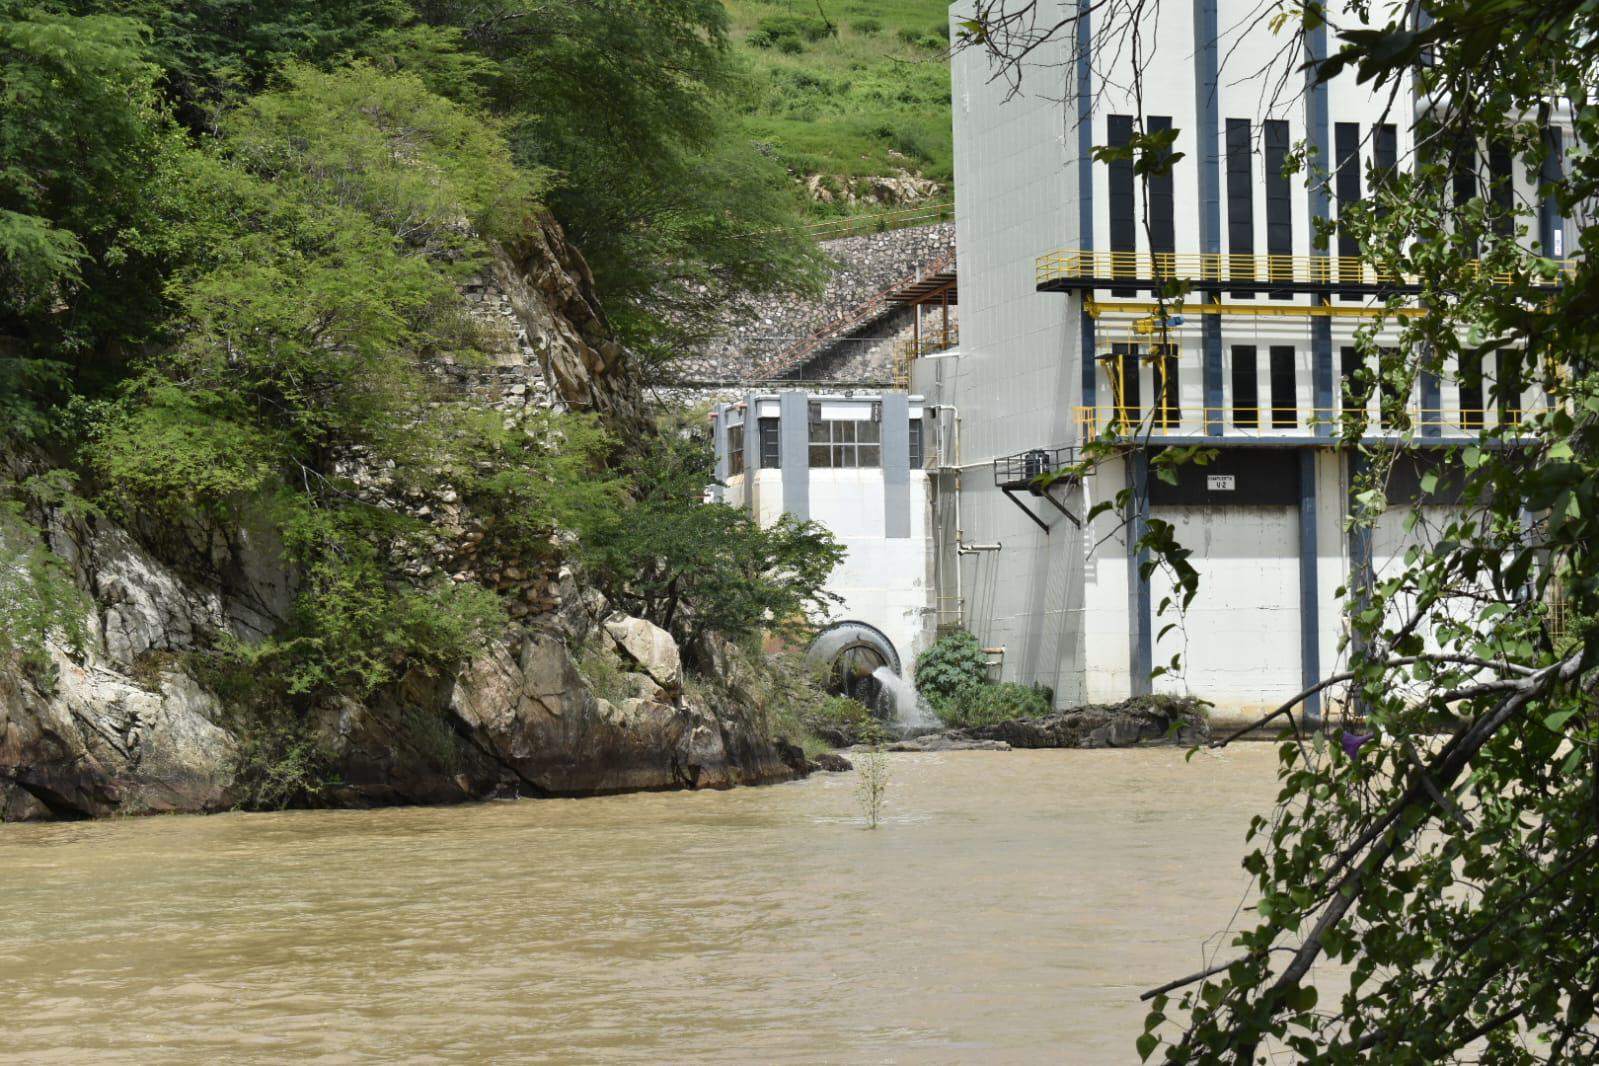 $!Pese al desfogue de la presa Sanalona, habitantes conviven sin riesgos